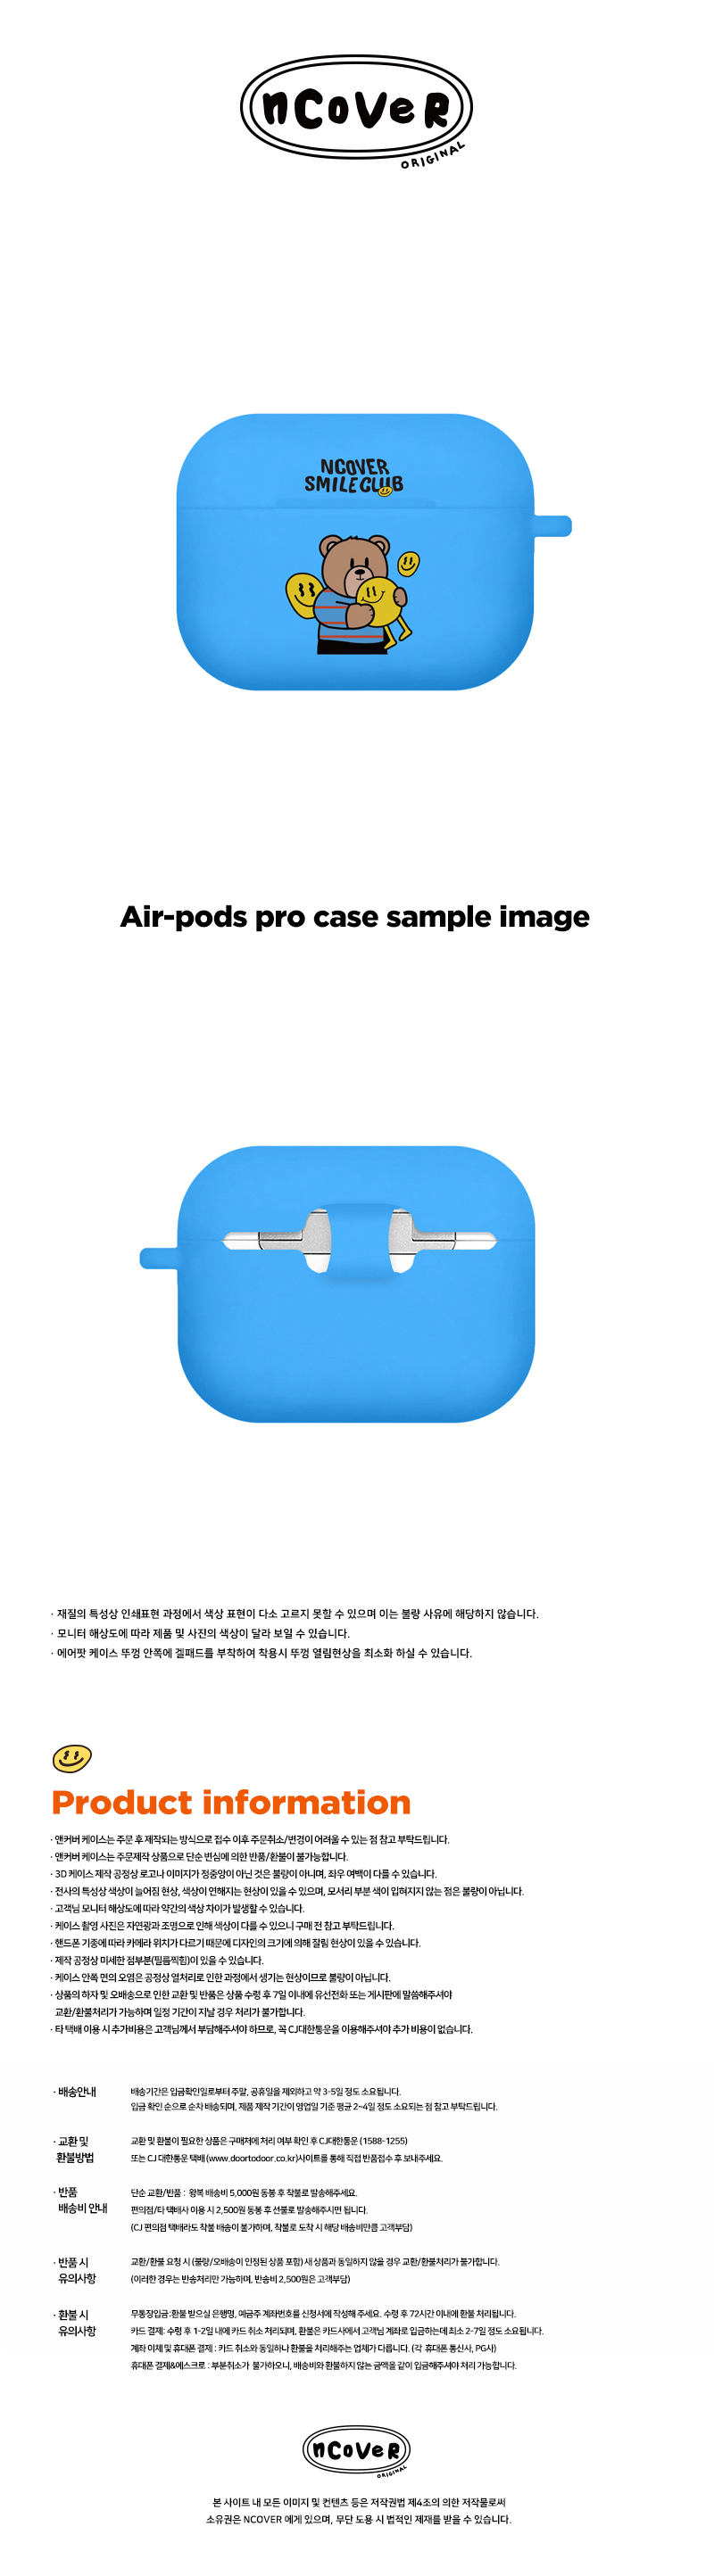  Smile ball bruin-blue(airpods pro jelly)  15,000원 - 바이인터내셔널주식회사 디지털, 이어폰/헤드폰, 이어폰/헤드폰 액세서리, 에어팟/에어팟프로 케이스 바보사랑  Smile ball bruin-blue(airpods pro jelly)  15,000원 - 바이인터내셔널주식회사 디지털, 이어폰/헤드폰, 이어폰/헤드폰 액세서리, 에어팟/에어팟프로 케이스 바보사랑